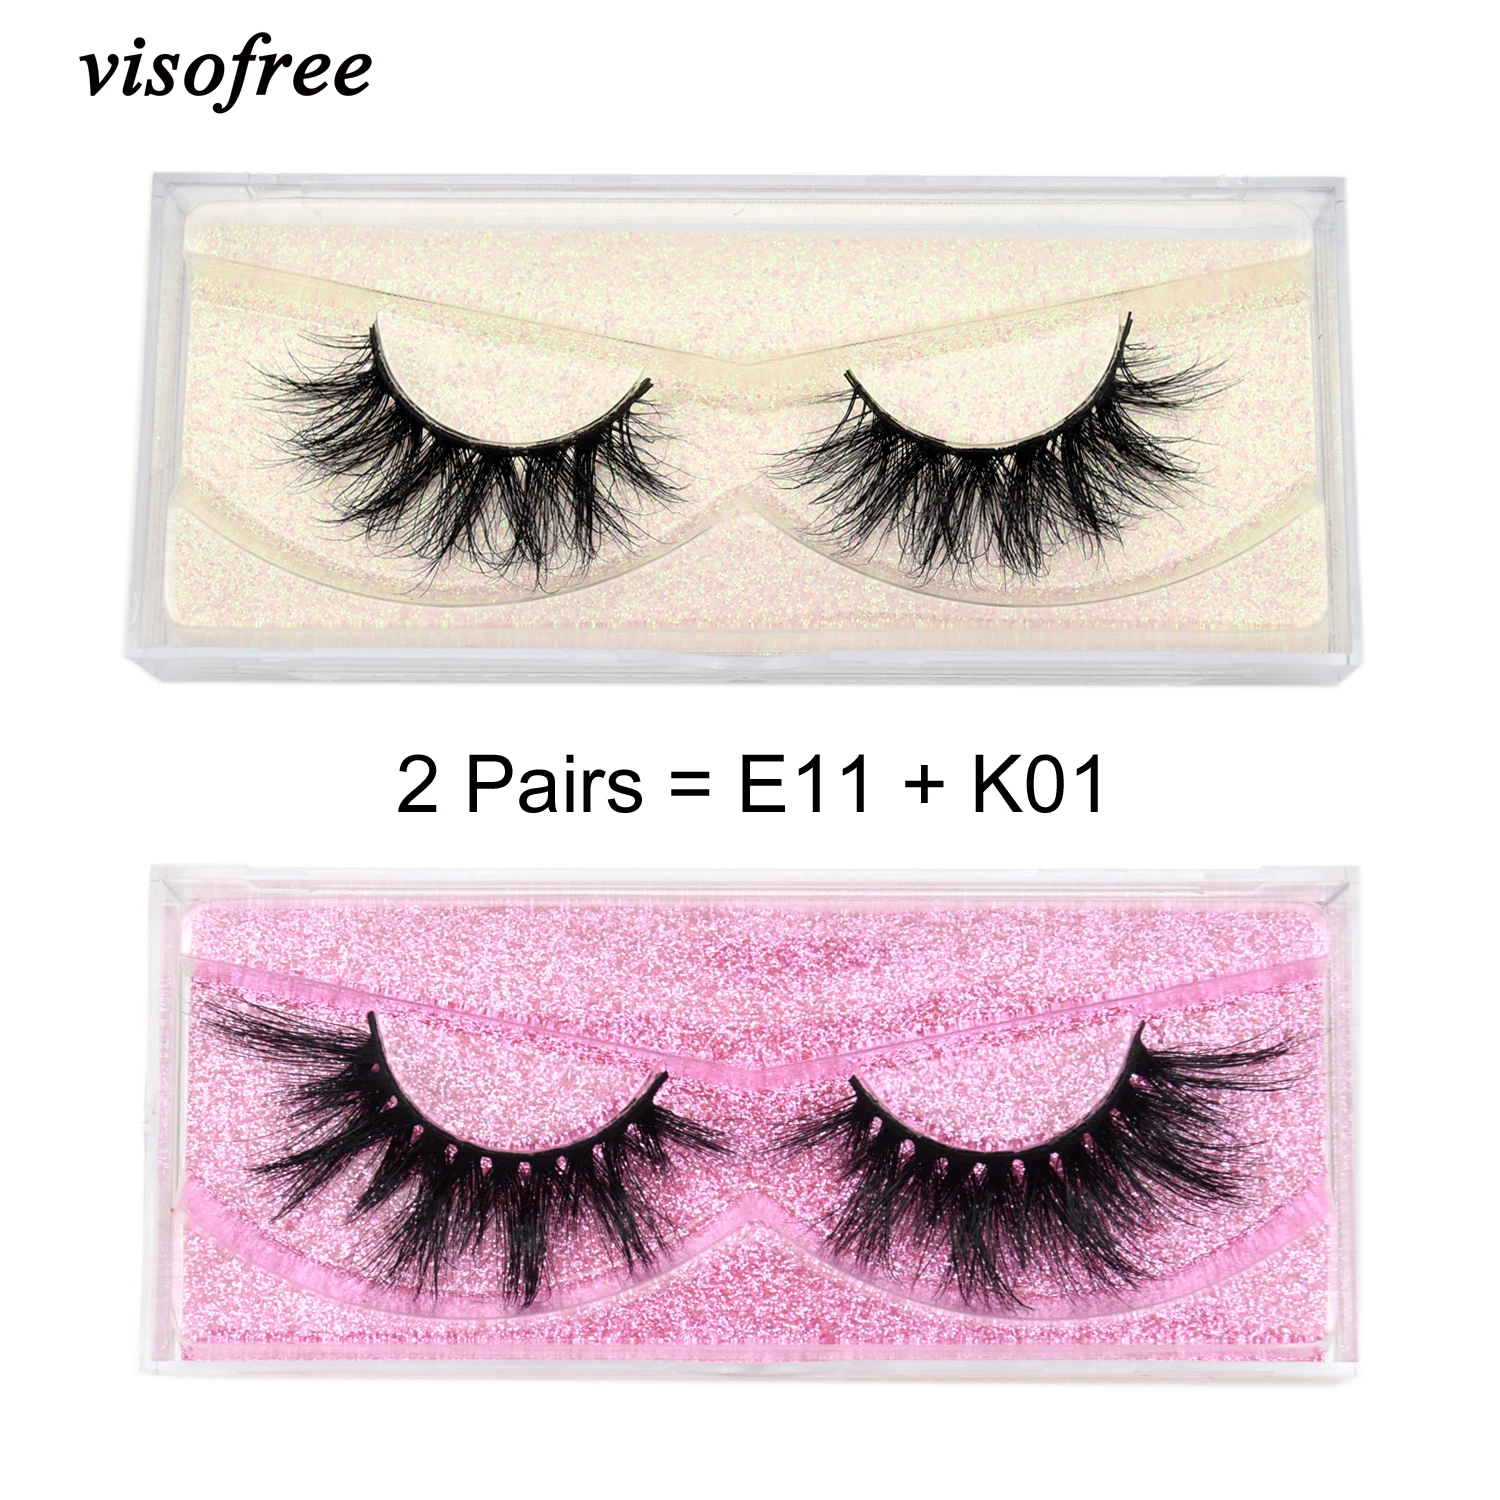 

2 Pairs/lot Visofree Eyelashes Makeup 3D Mink Lashes False Eyelashes Extension Cruel-free Mink Lash Full Volume Lashes Dramatic